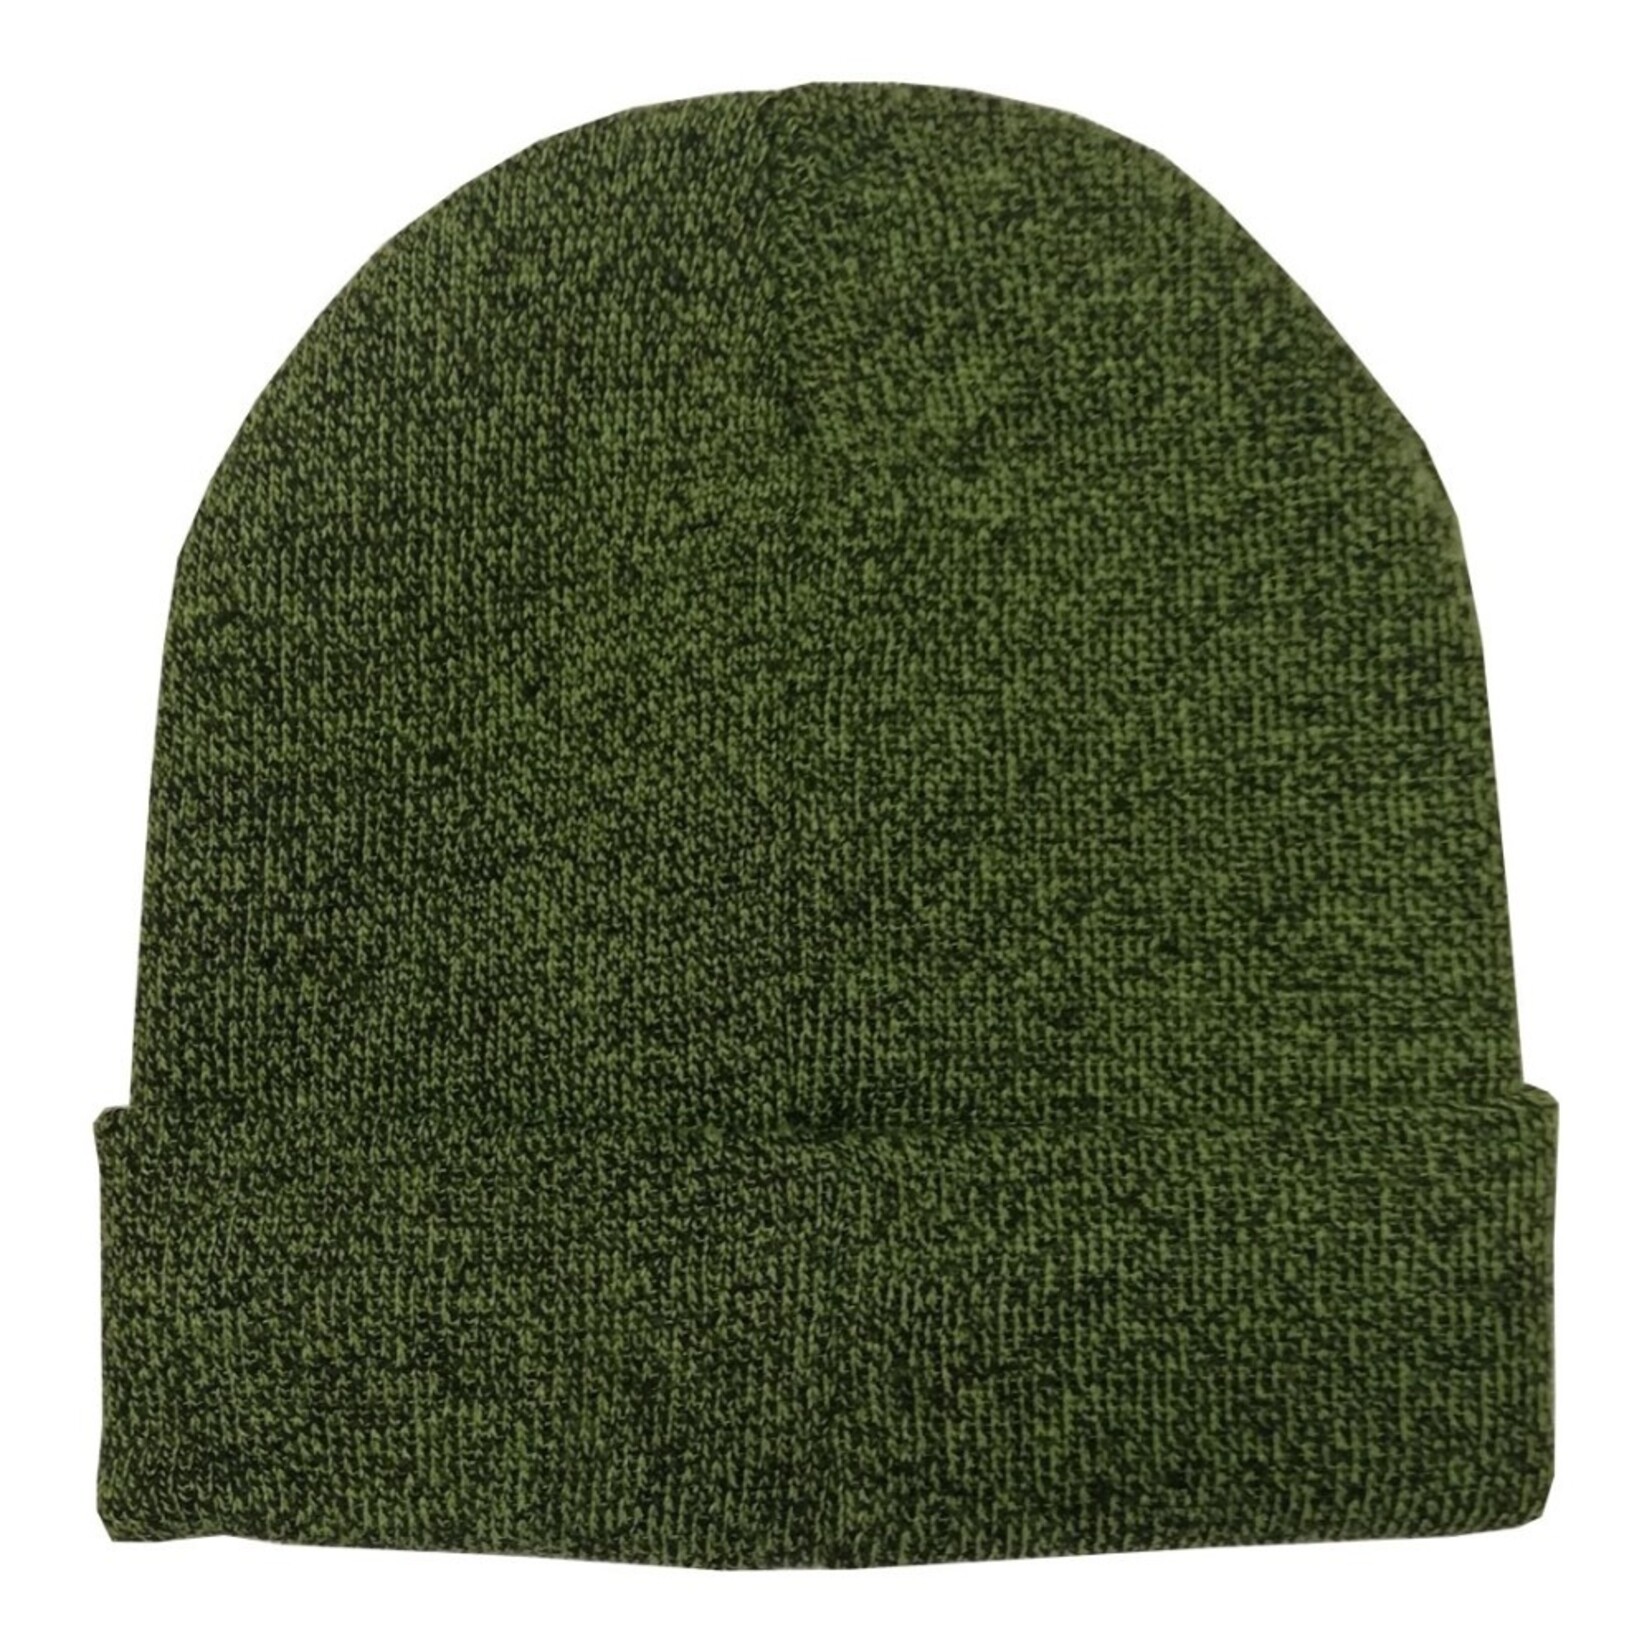 Traditional Craftwear Green "Ireland" Badge Knit Hat